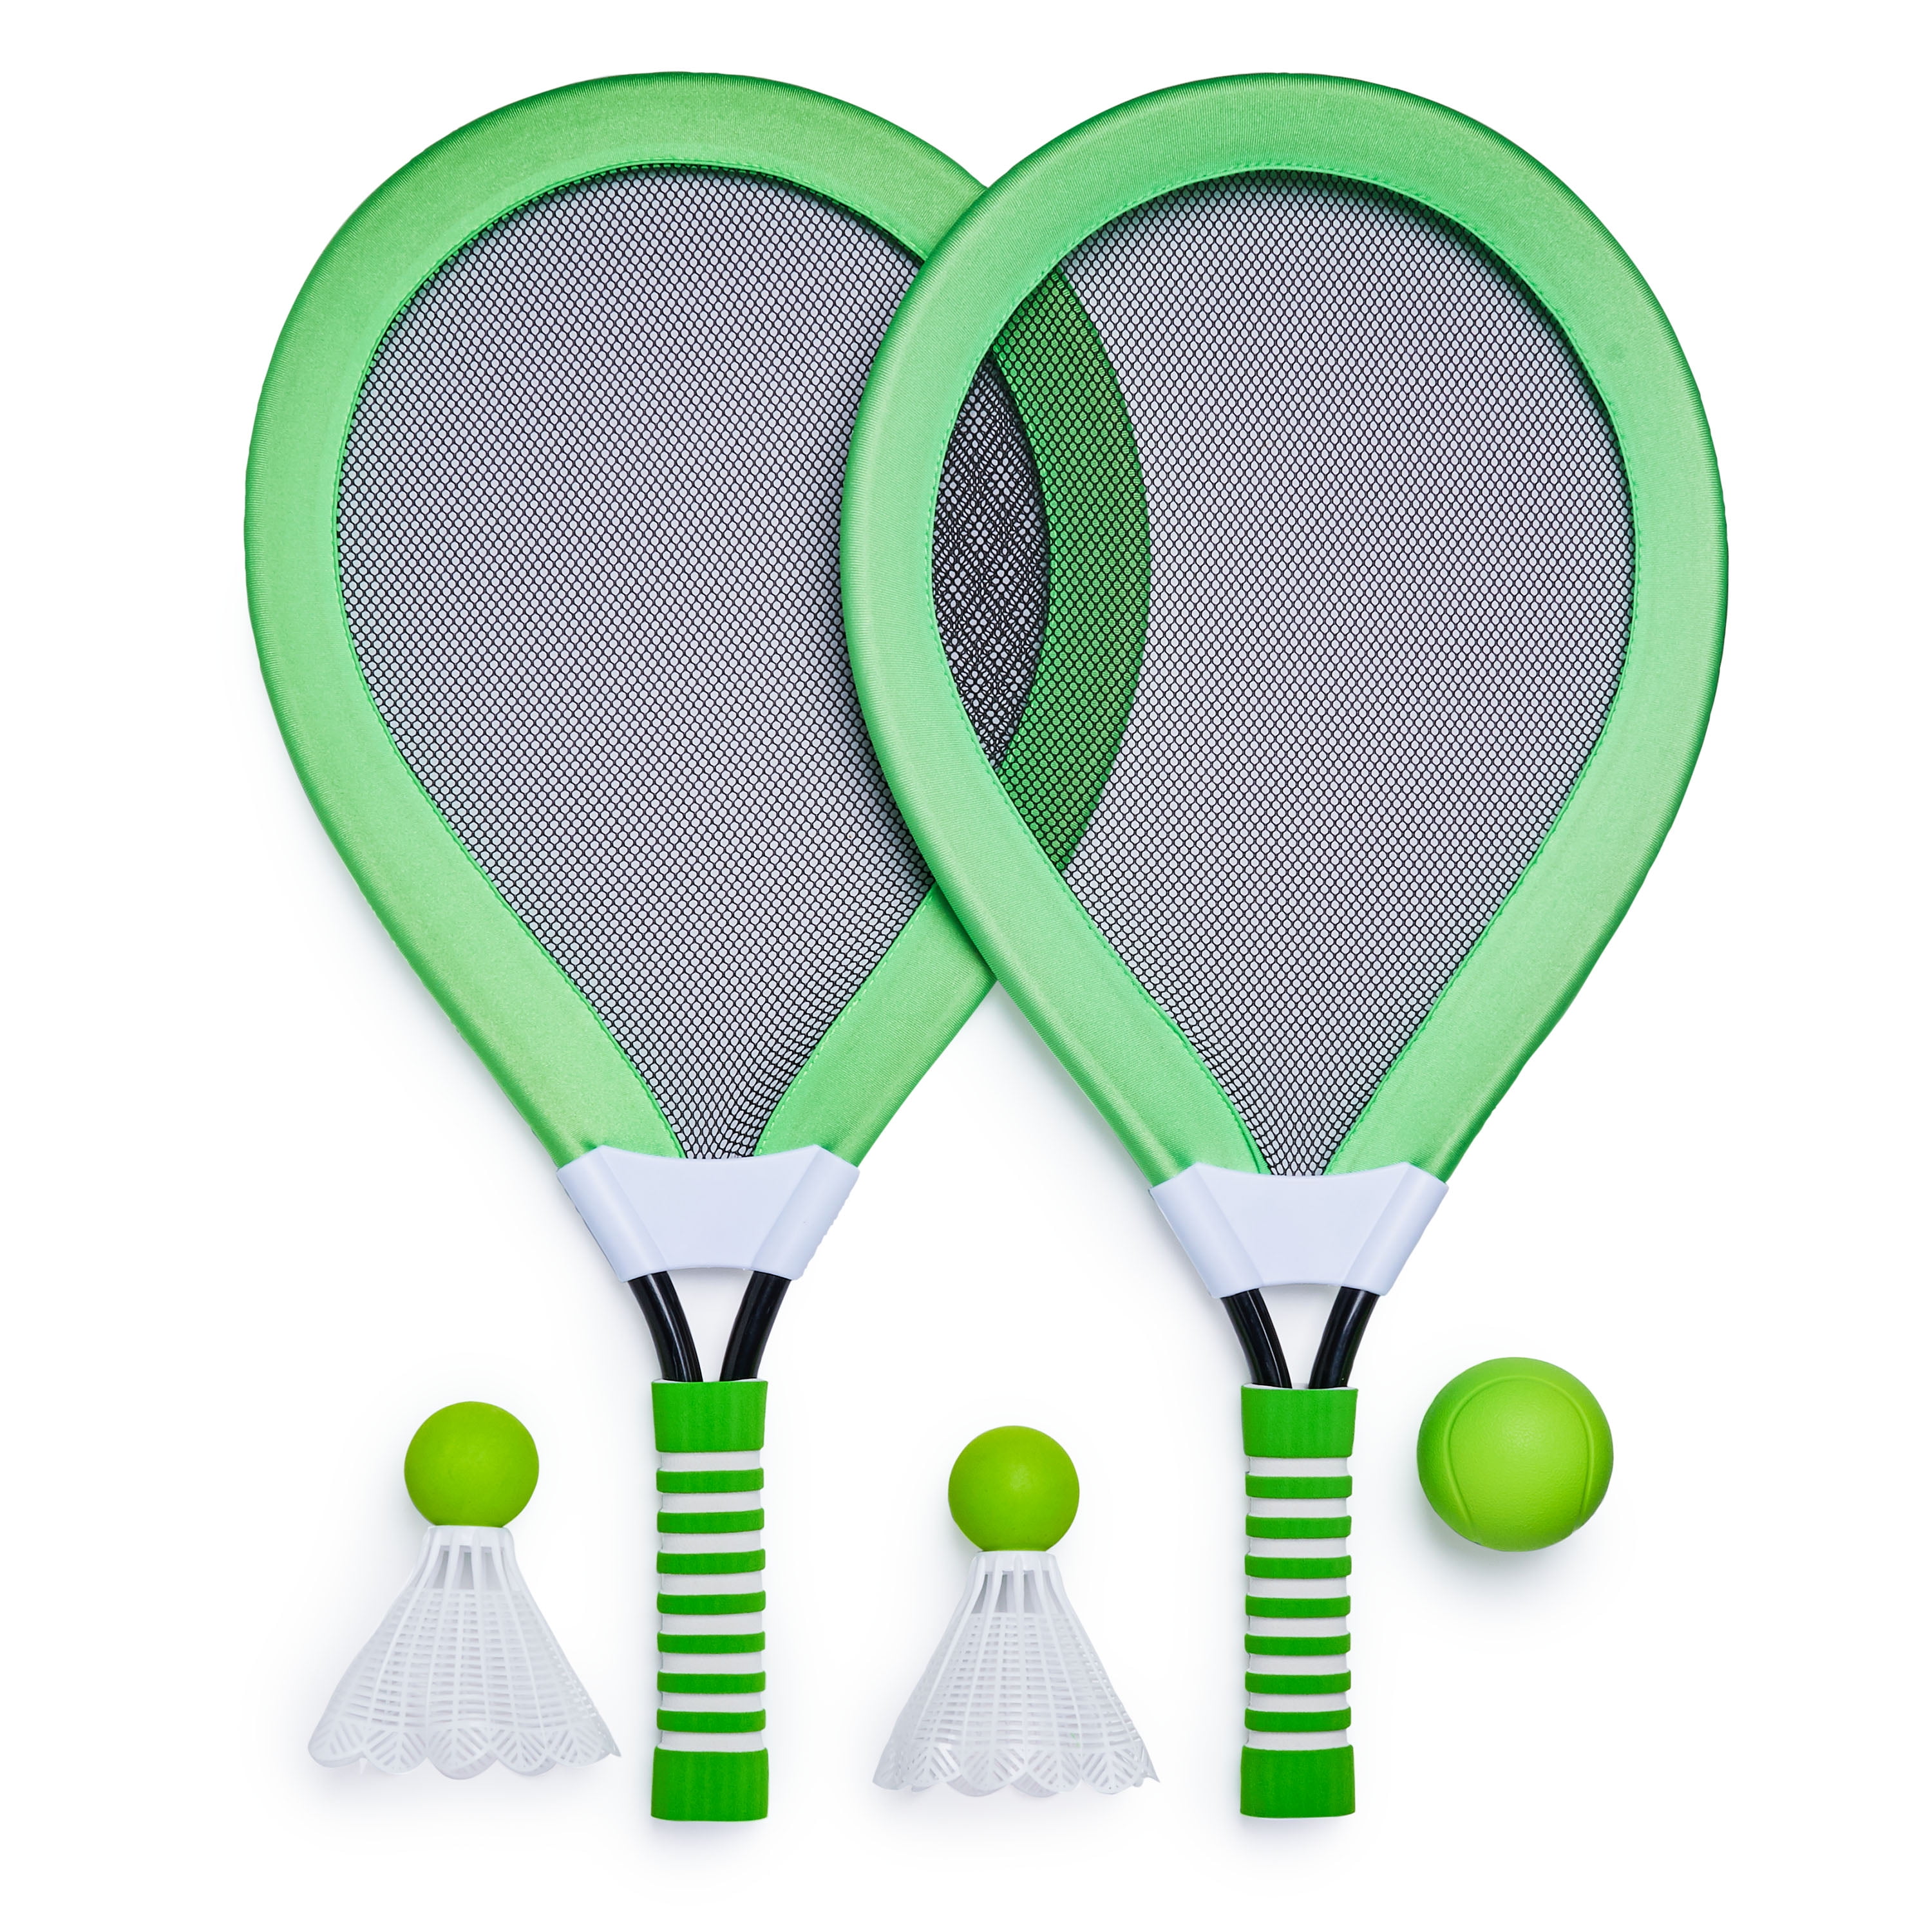 Play Day Jumbo Badminton Racquet